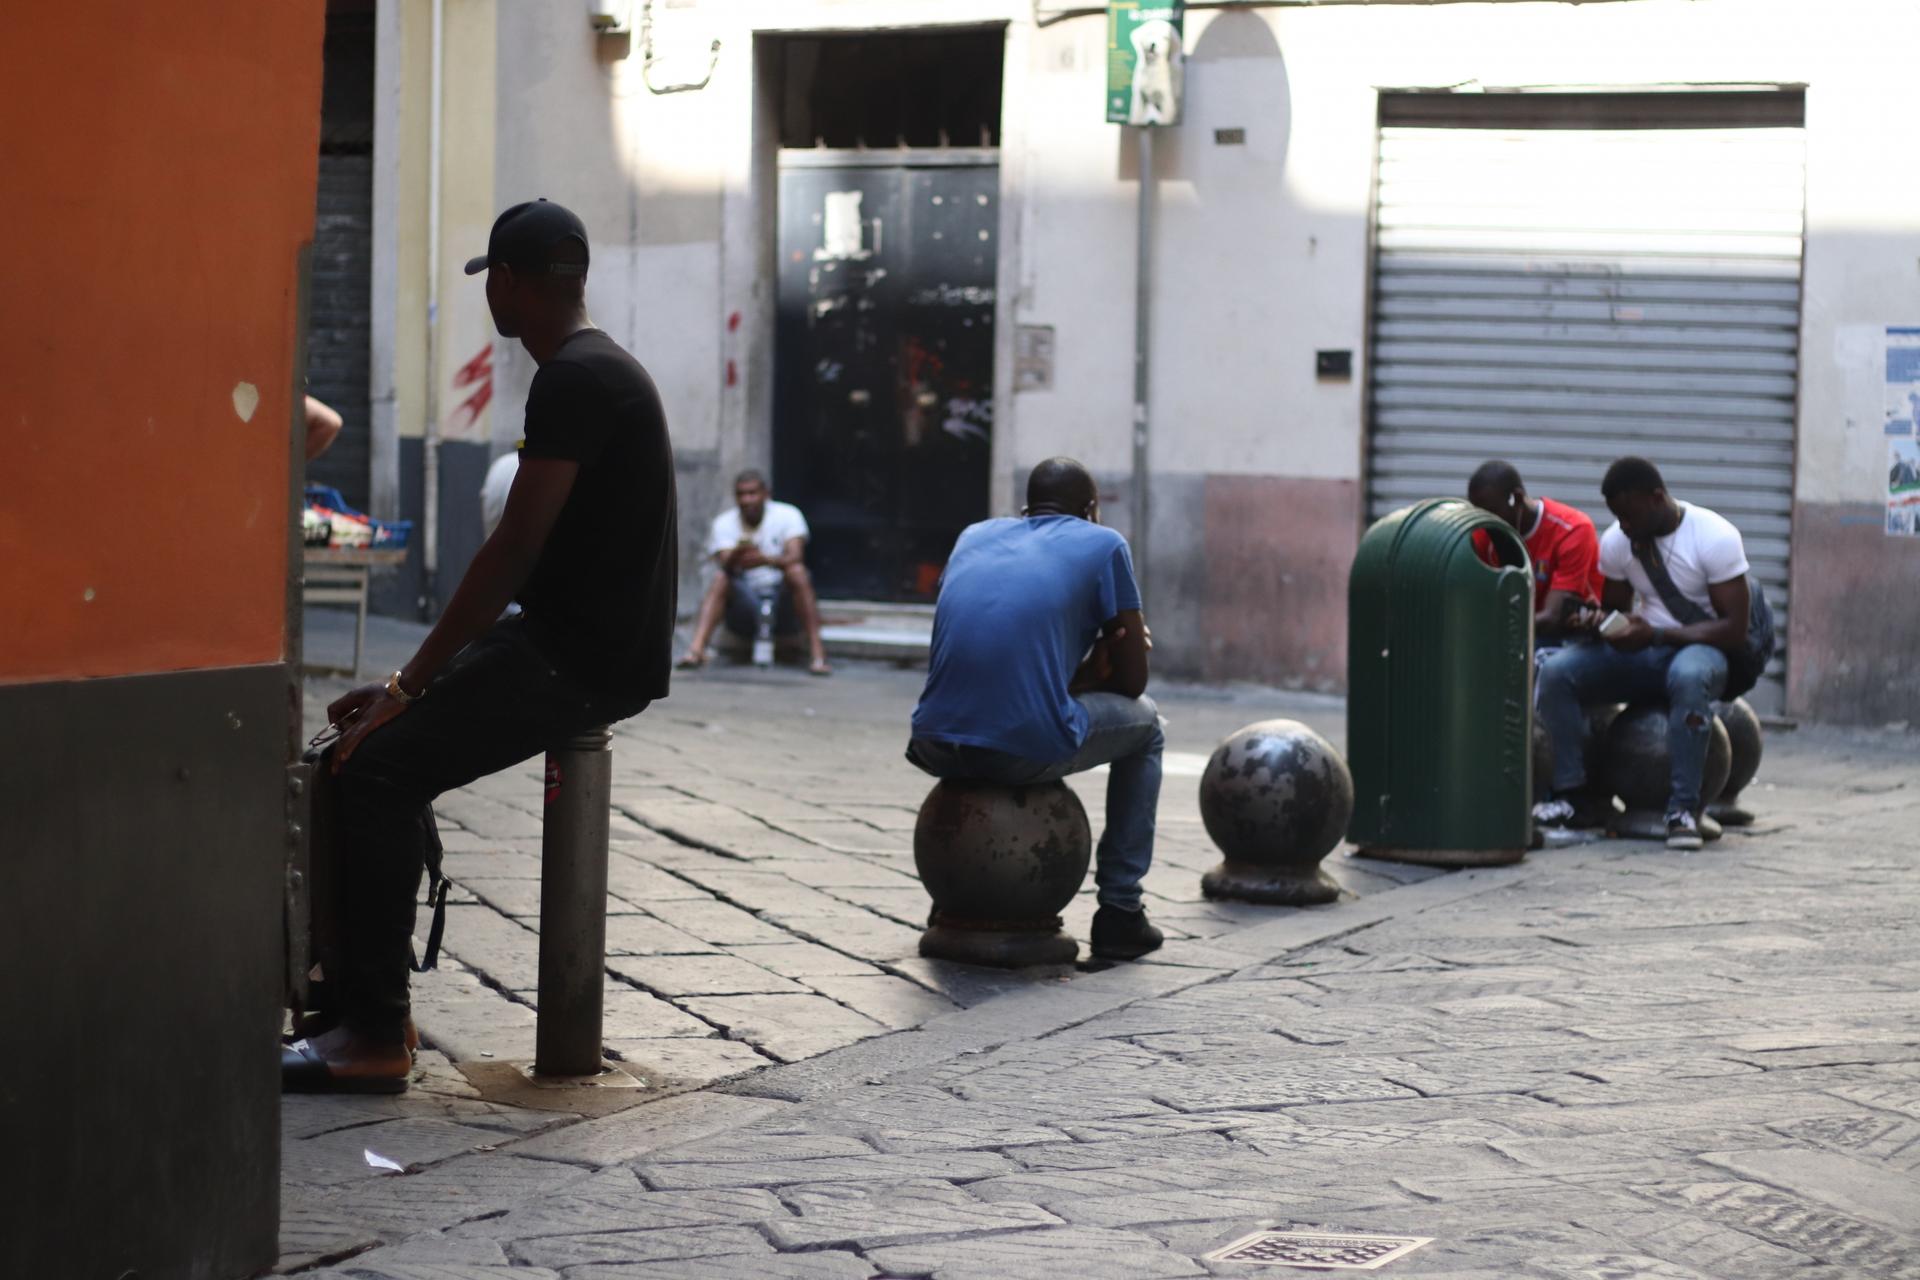 asylum-seekers sit in the street idly